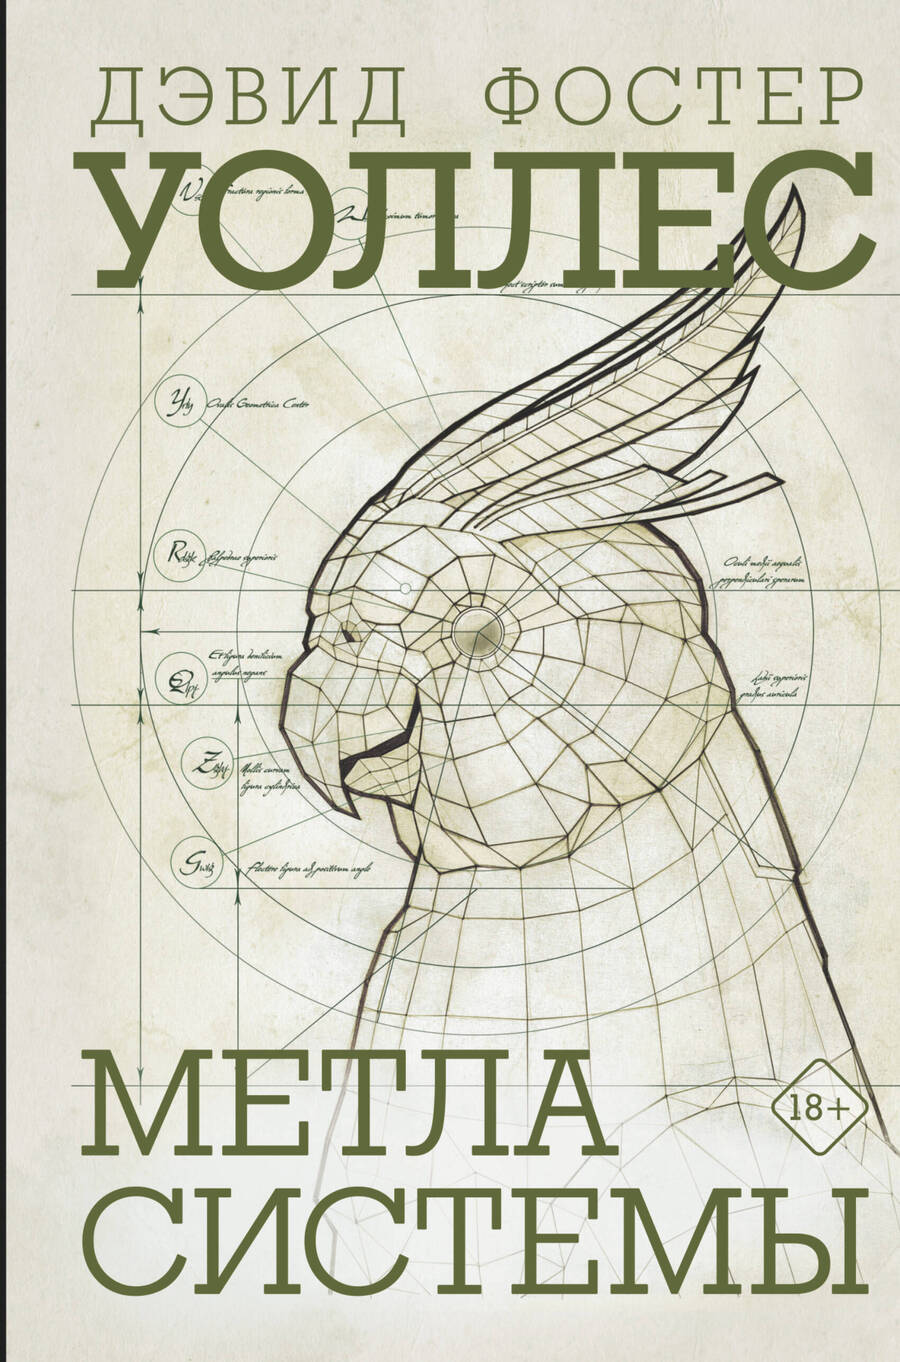 Обложка книги "Уоллес: Метла системы"